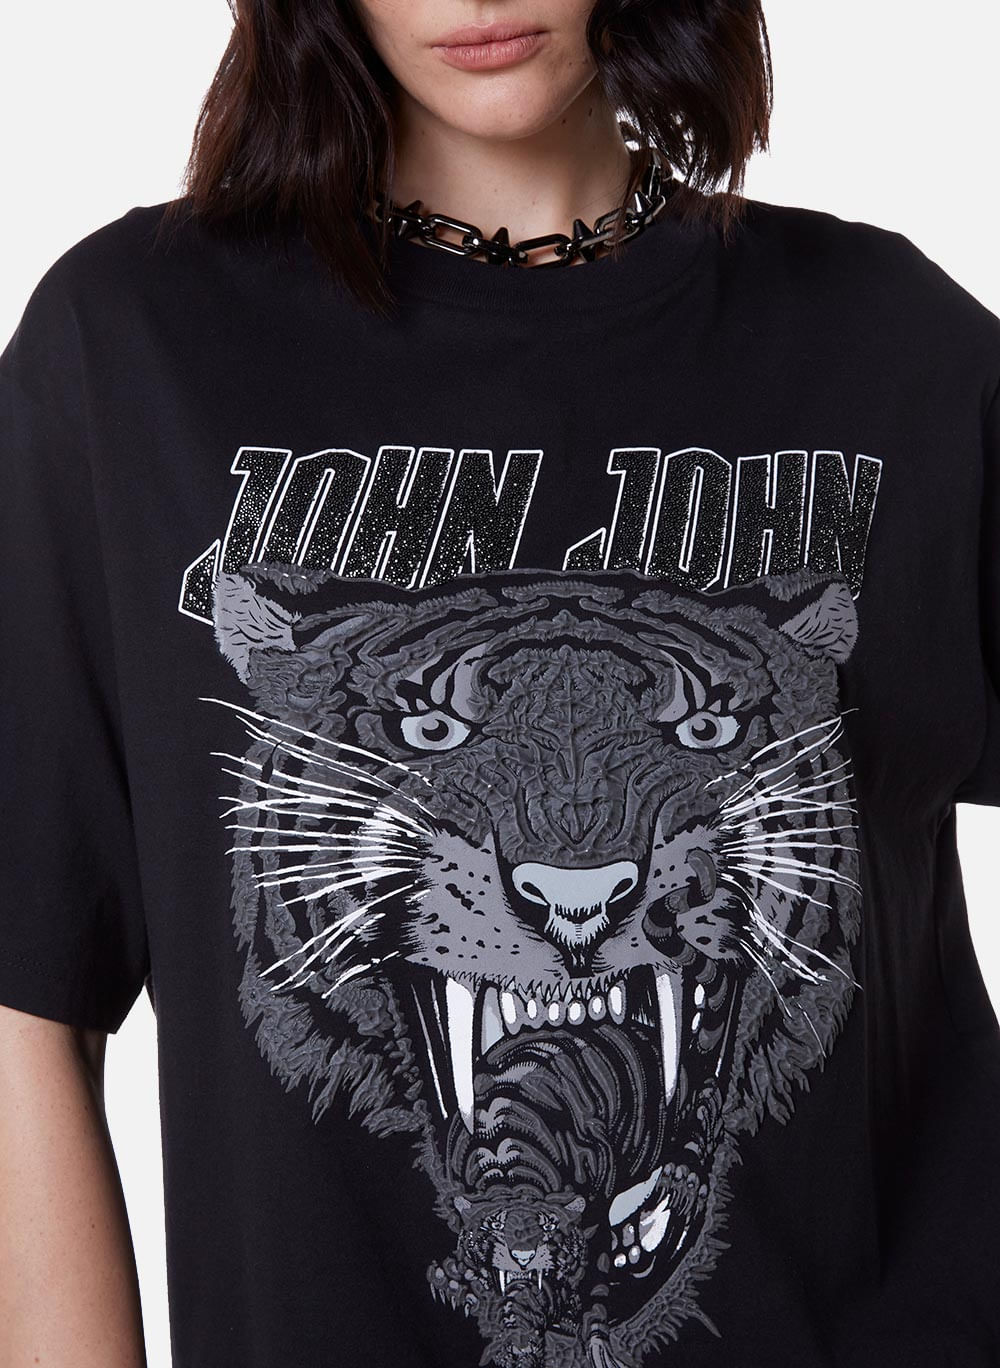 Camiseta John John JJ Line Feminina - Preto